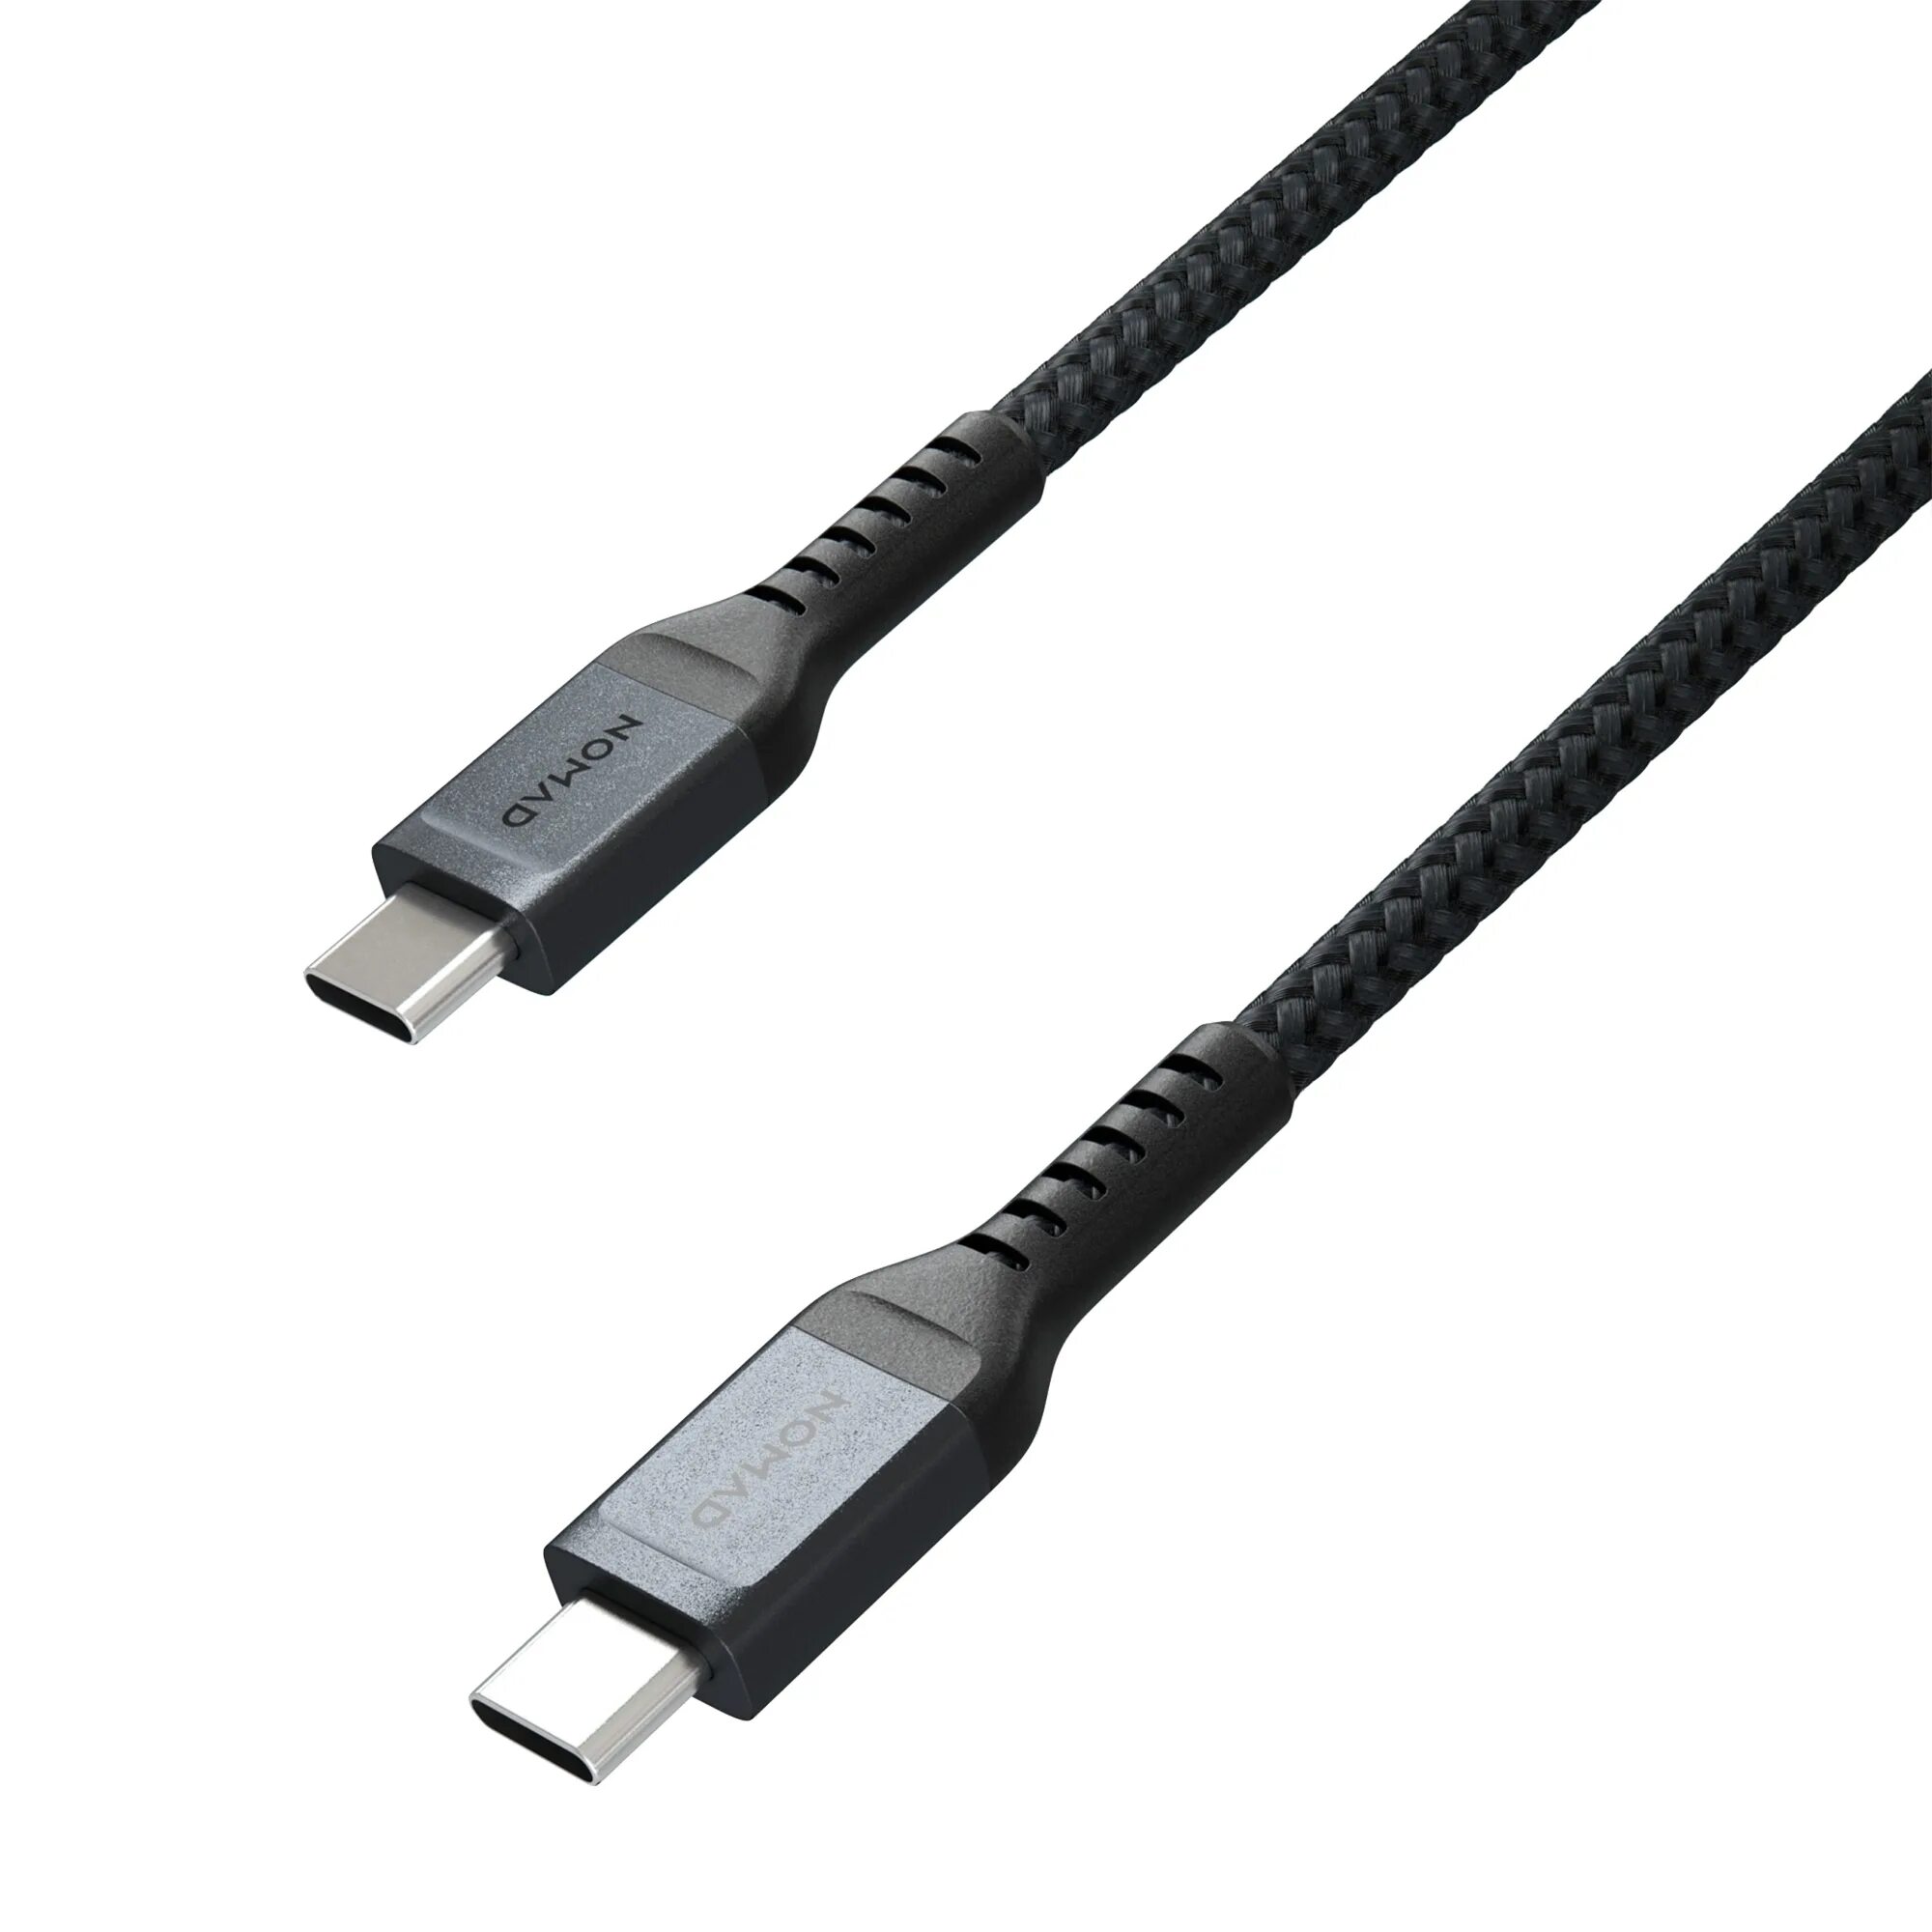 Usb type a купить. Кабель USB C Nomad. Кабель Лайтнинг юсб. USB-C to Lightning Cable (1 m). Лайтинг 3.0 юсб кабель.